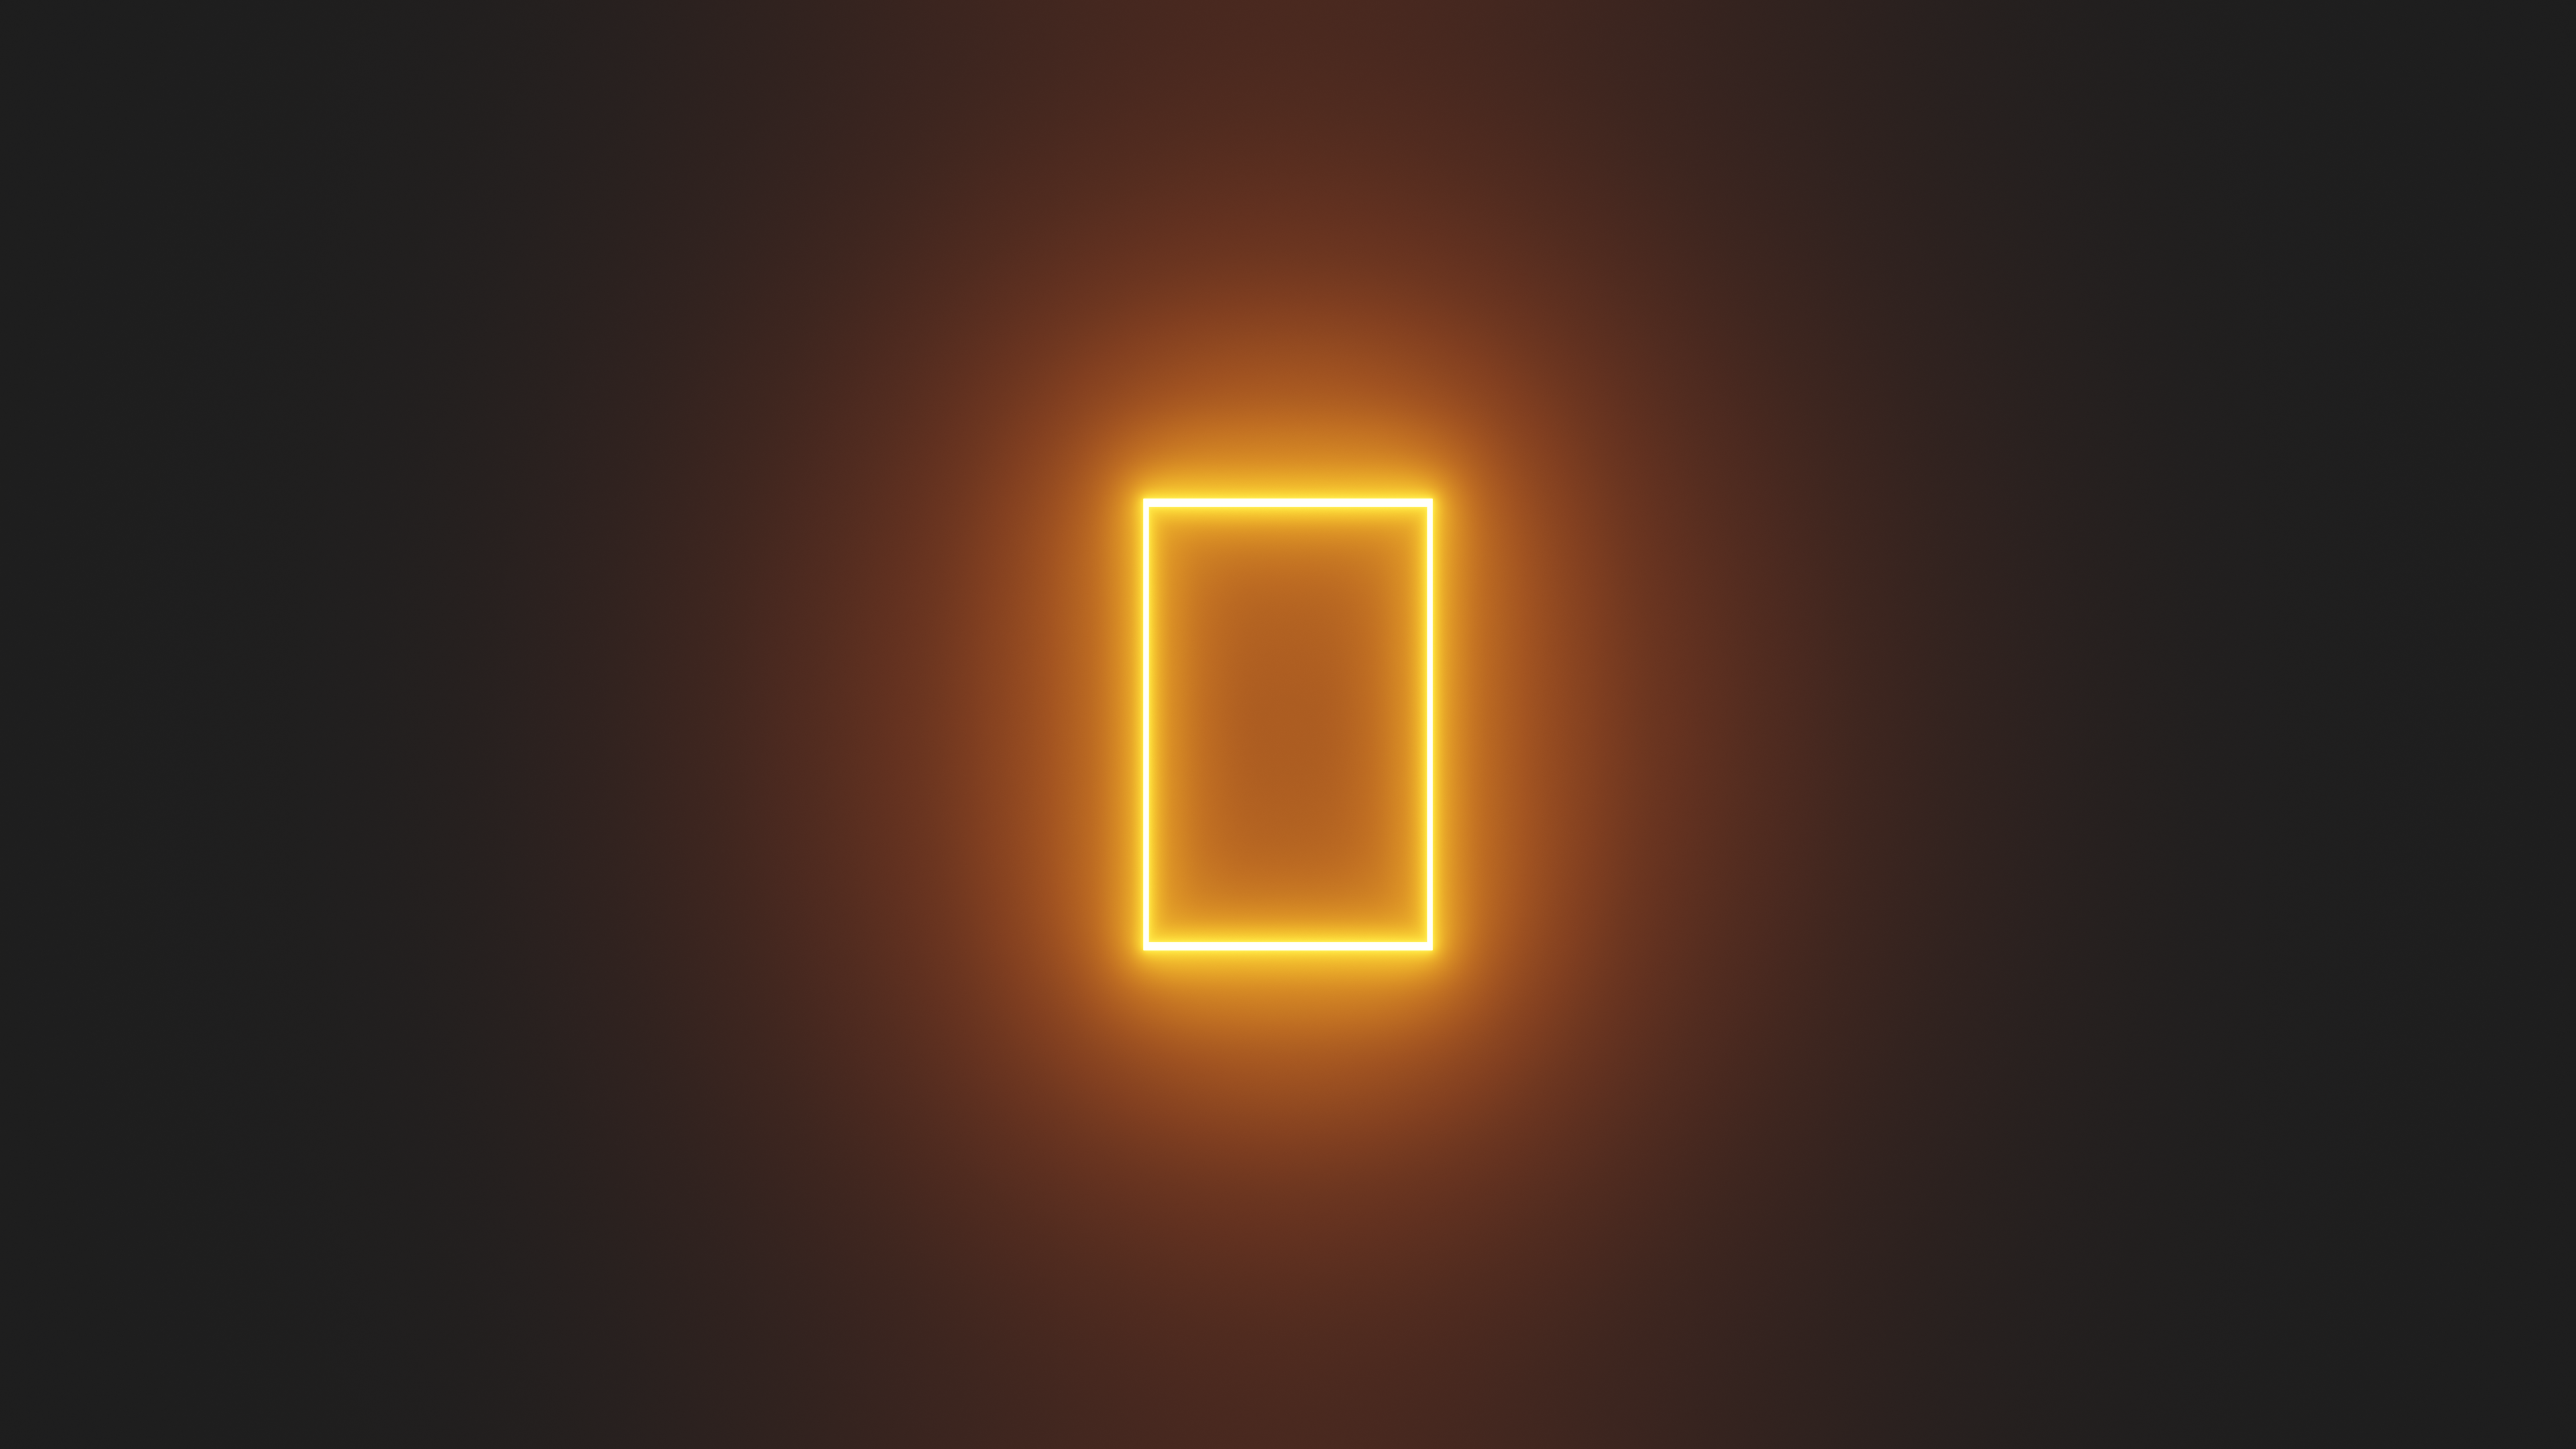 General 3840x2160 minimalism glowing neon abstract simple background digital art